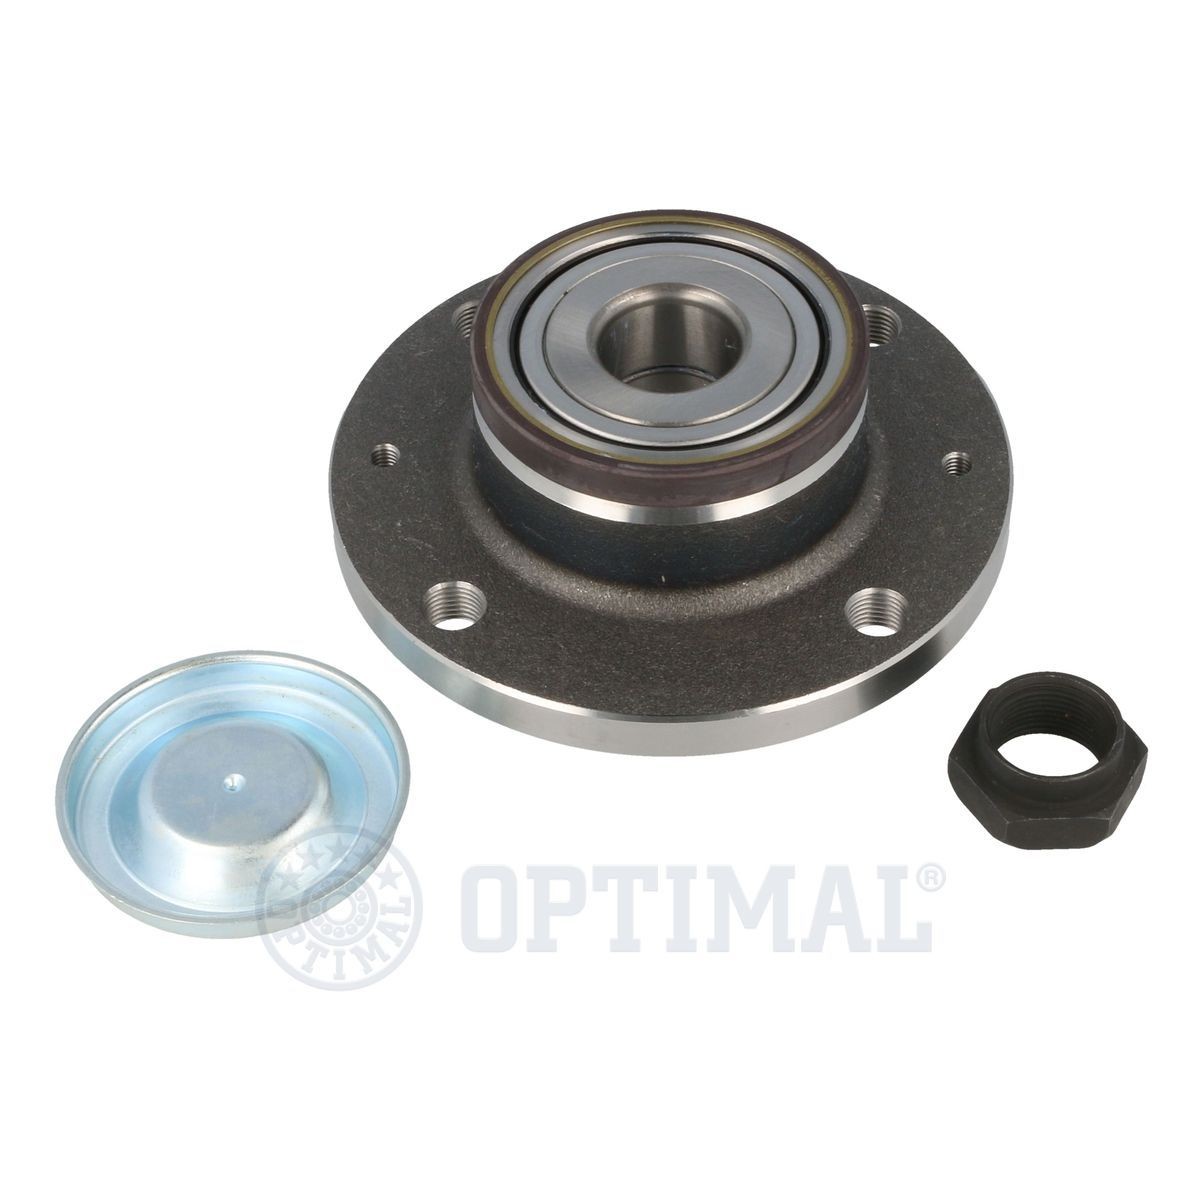 OPTIMAL 602251 Wheel bearing kit with integrated magnetic sensor ring, 129,1 mm